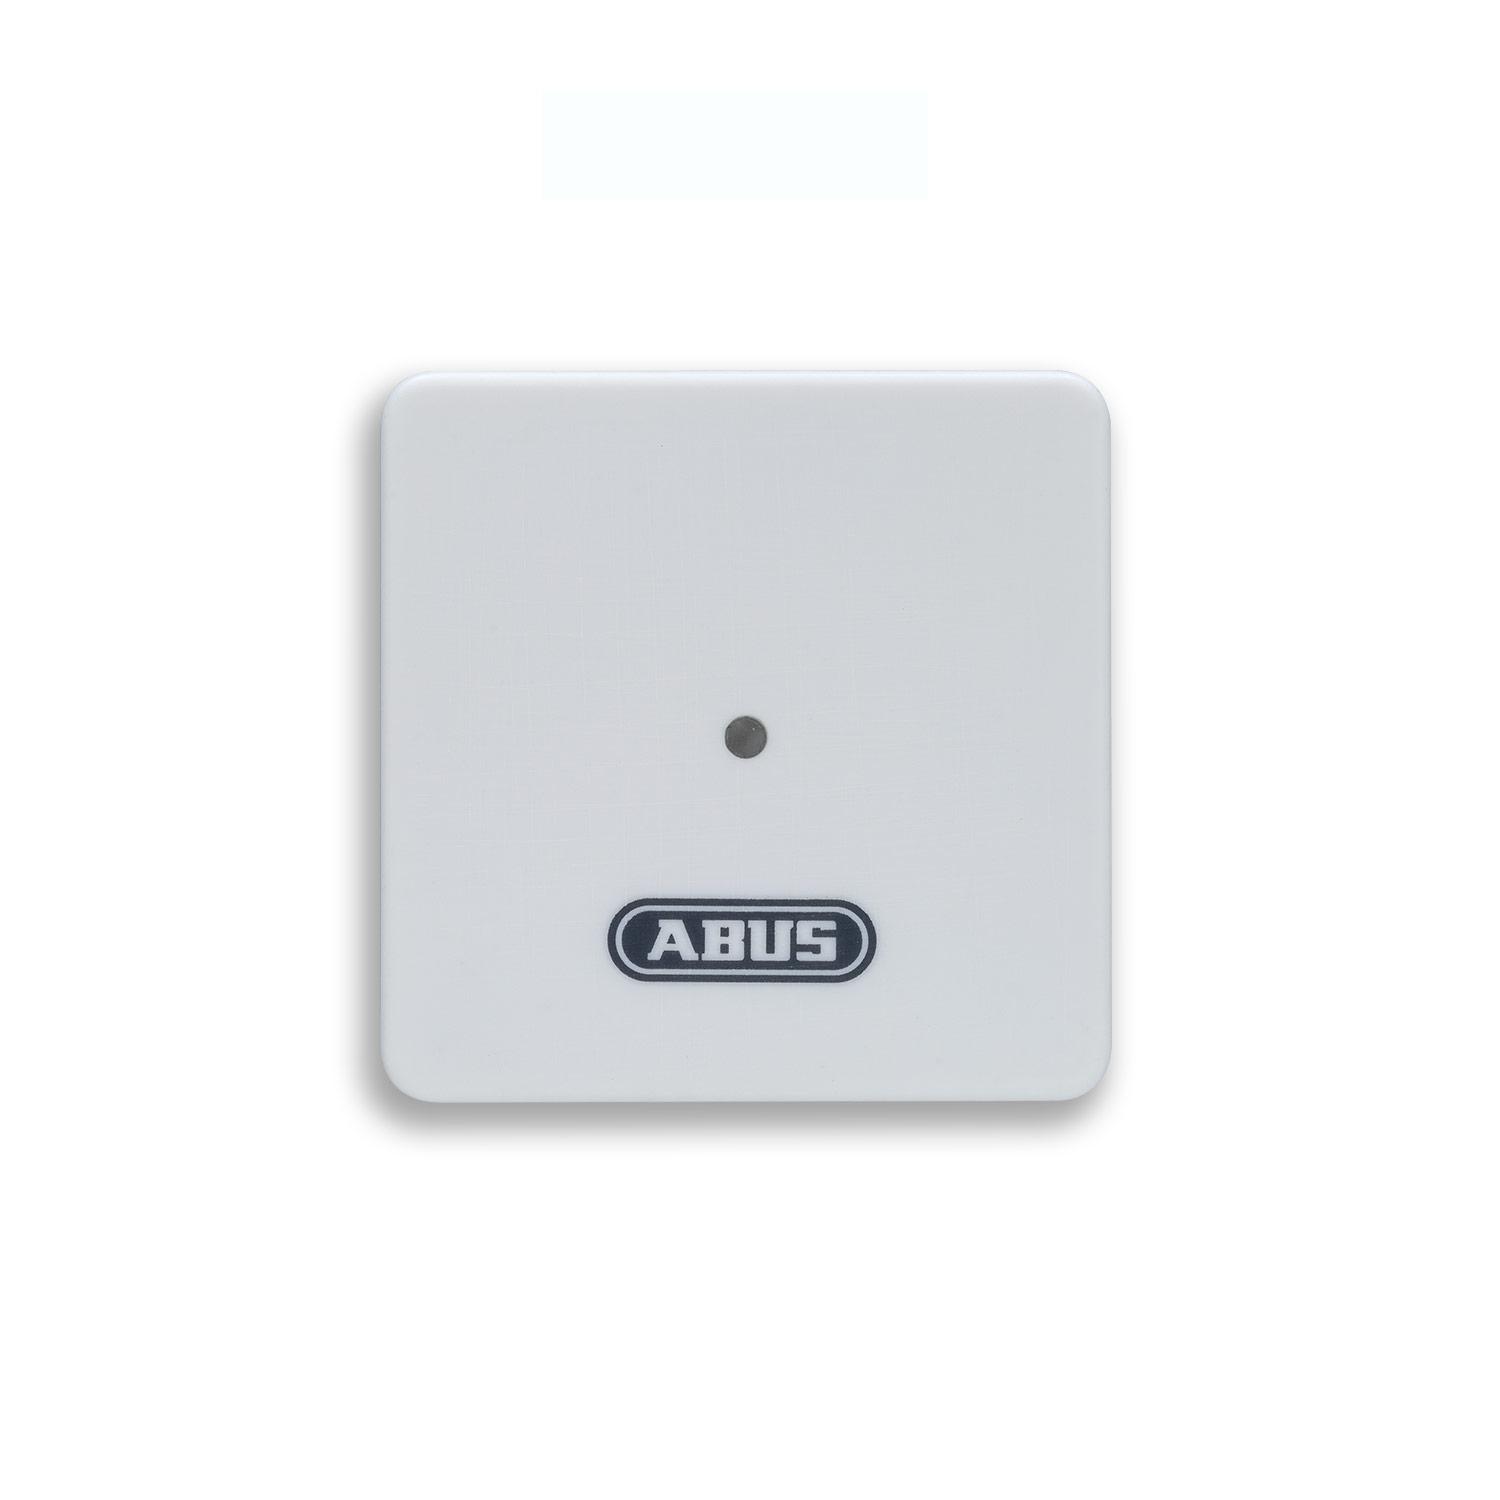 ABUS HomeTec Pro Bluetooth WLAN Bridge frontal